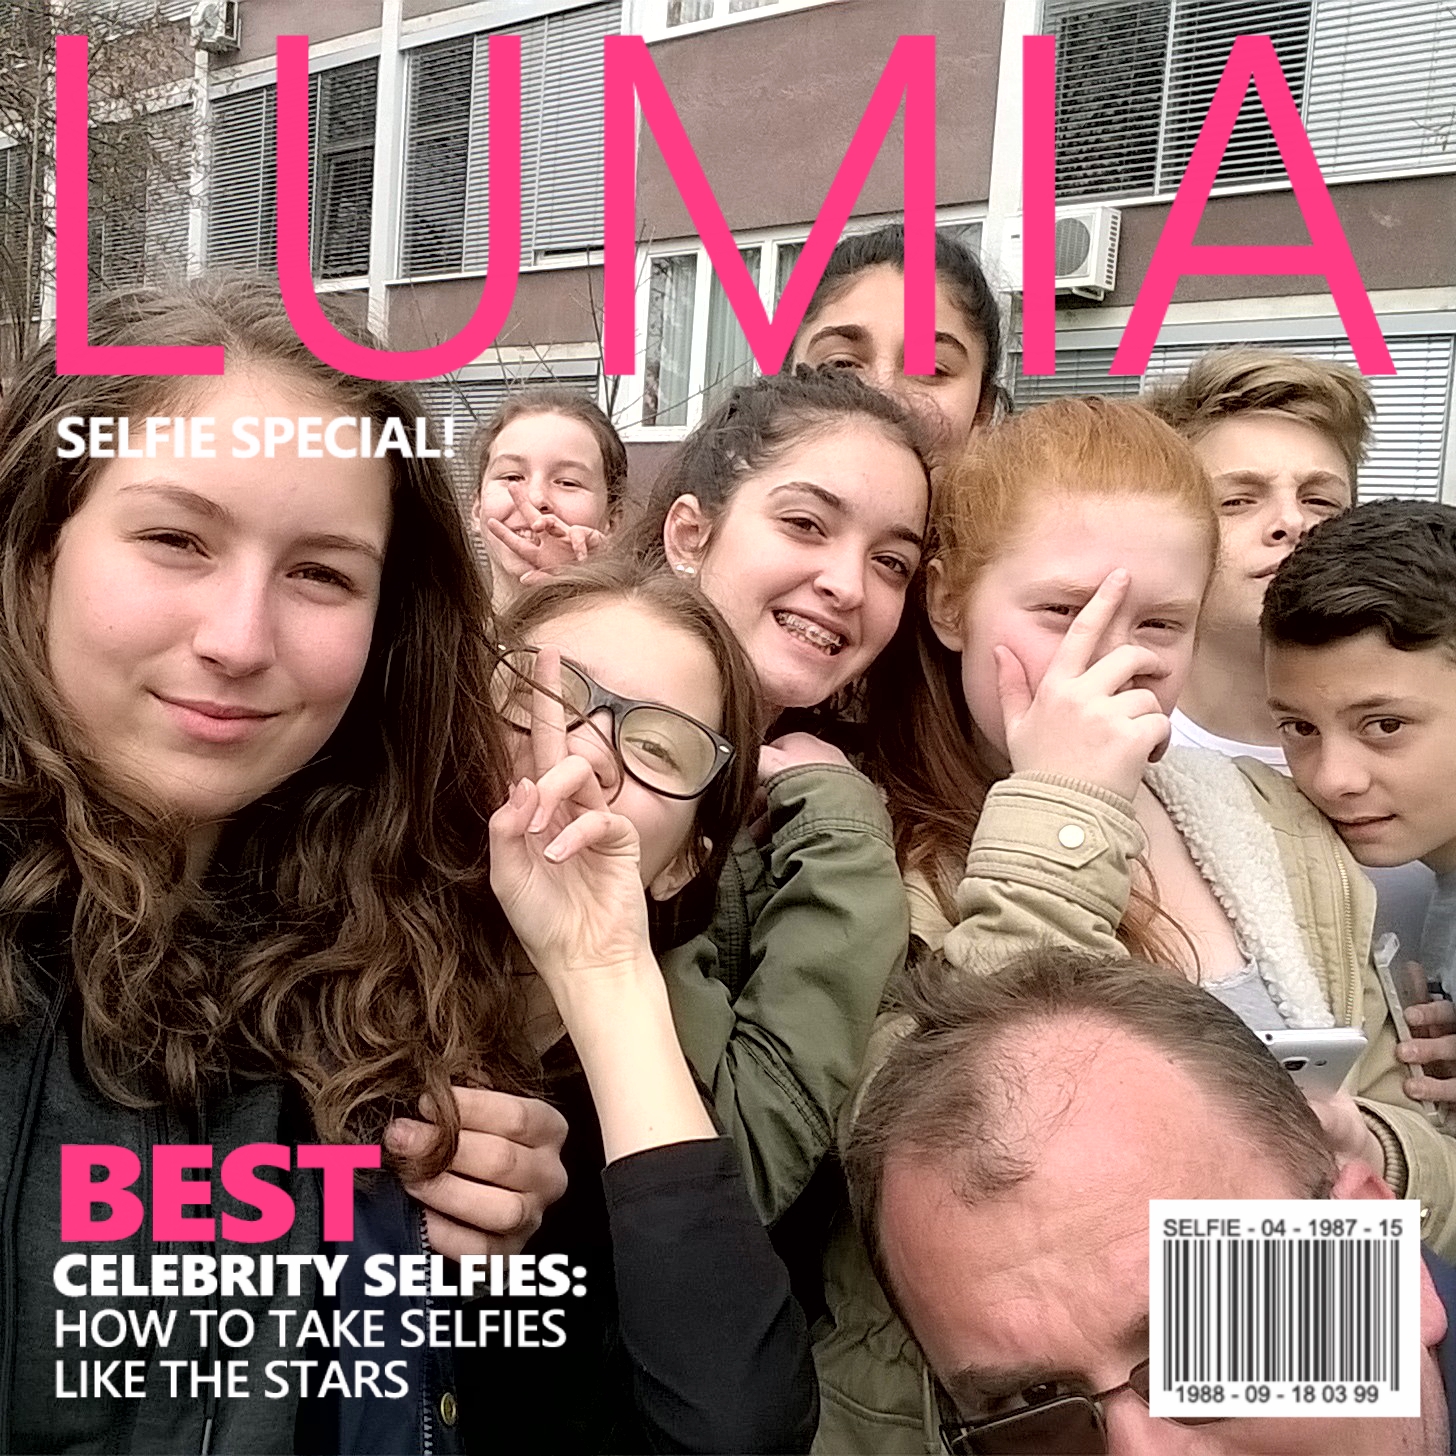 Zajeto s programom Lumia Selfie